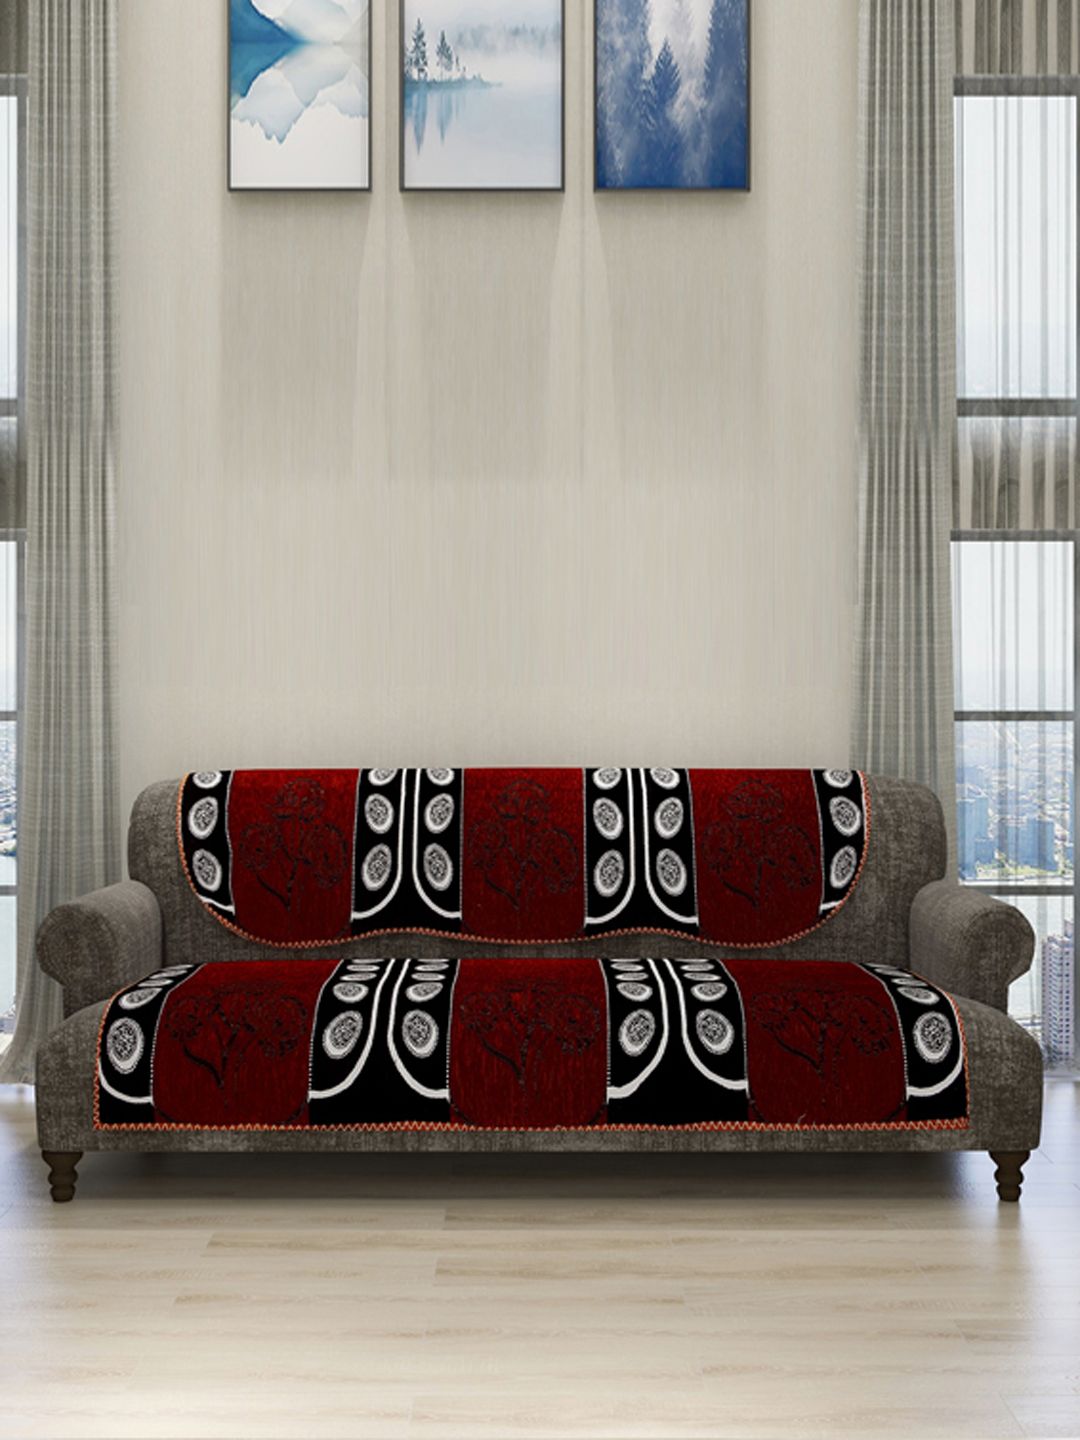 ROMEE 6-Piece Maroon & White Woven Design Chenille Sofa Set Covers Price in India